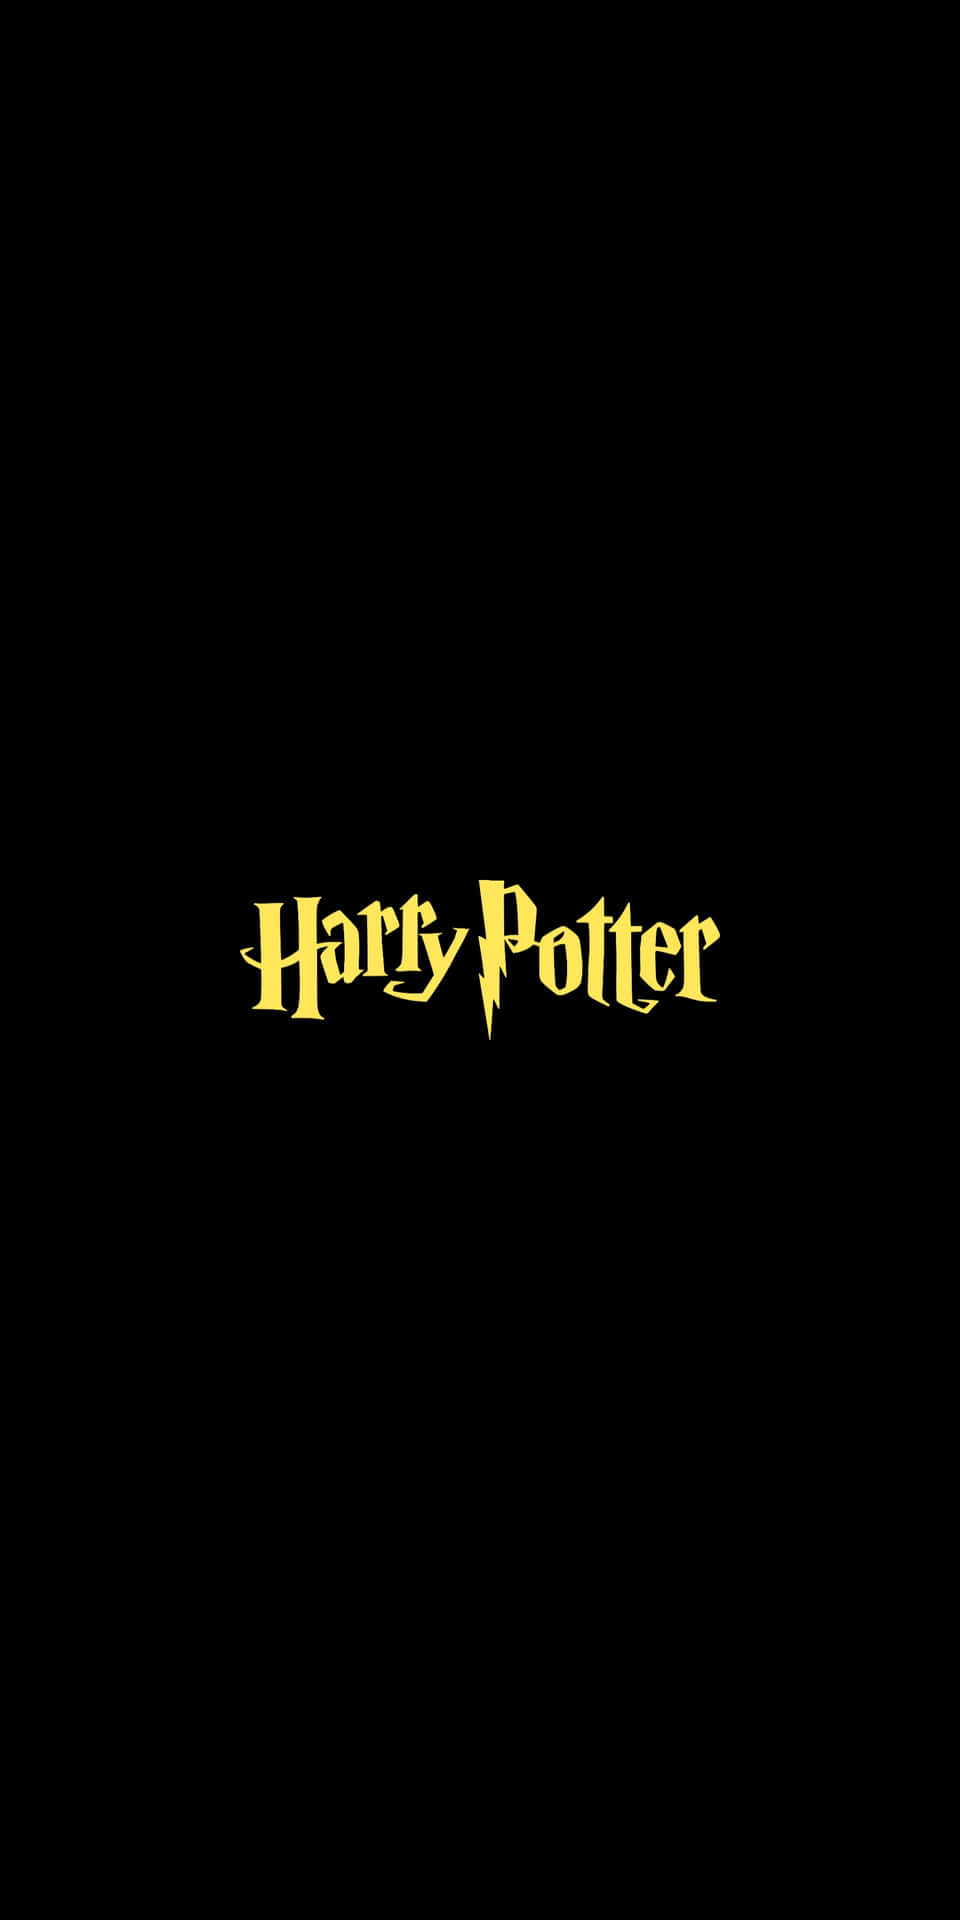 Stylish Harry Potter Text Background